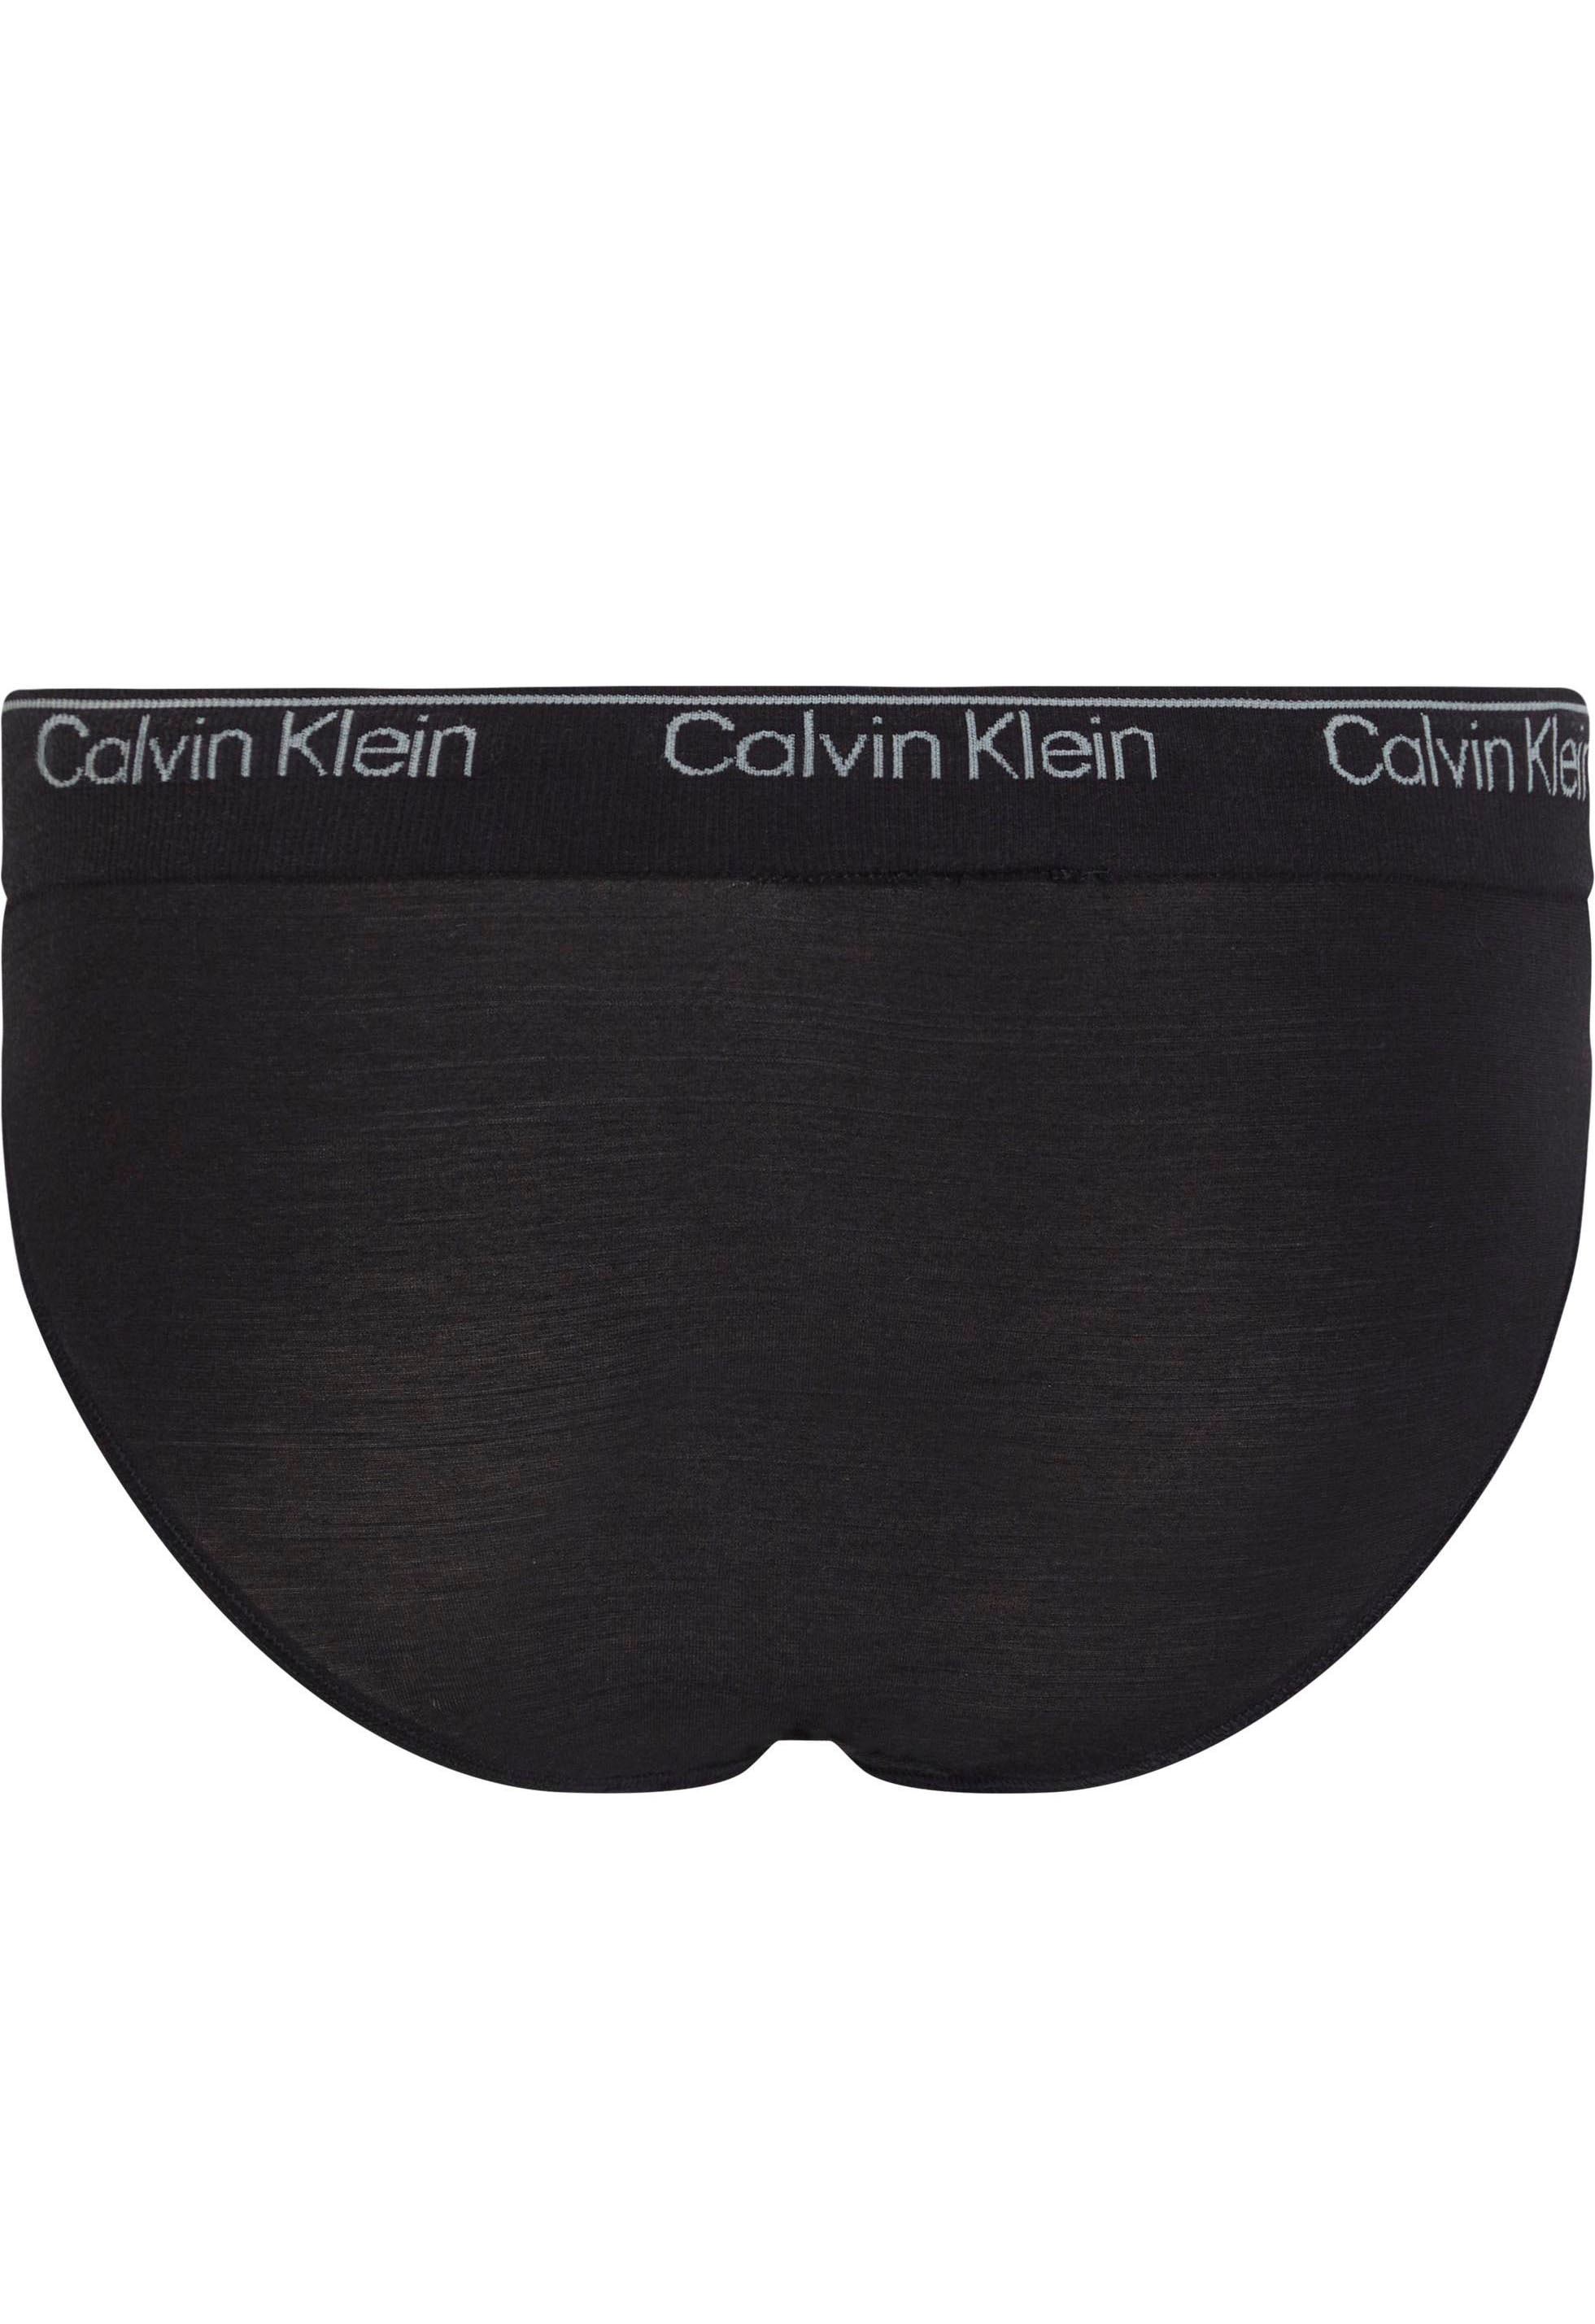 ♕ Klein am mit CK-Logo bei Bund Calvin »BIKINI«, Bikinislip